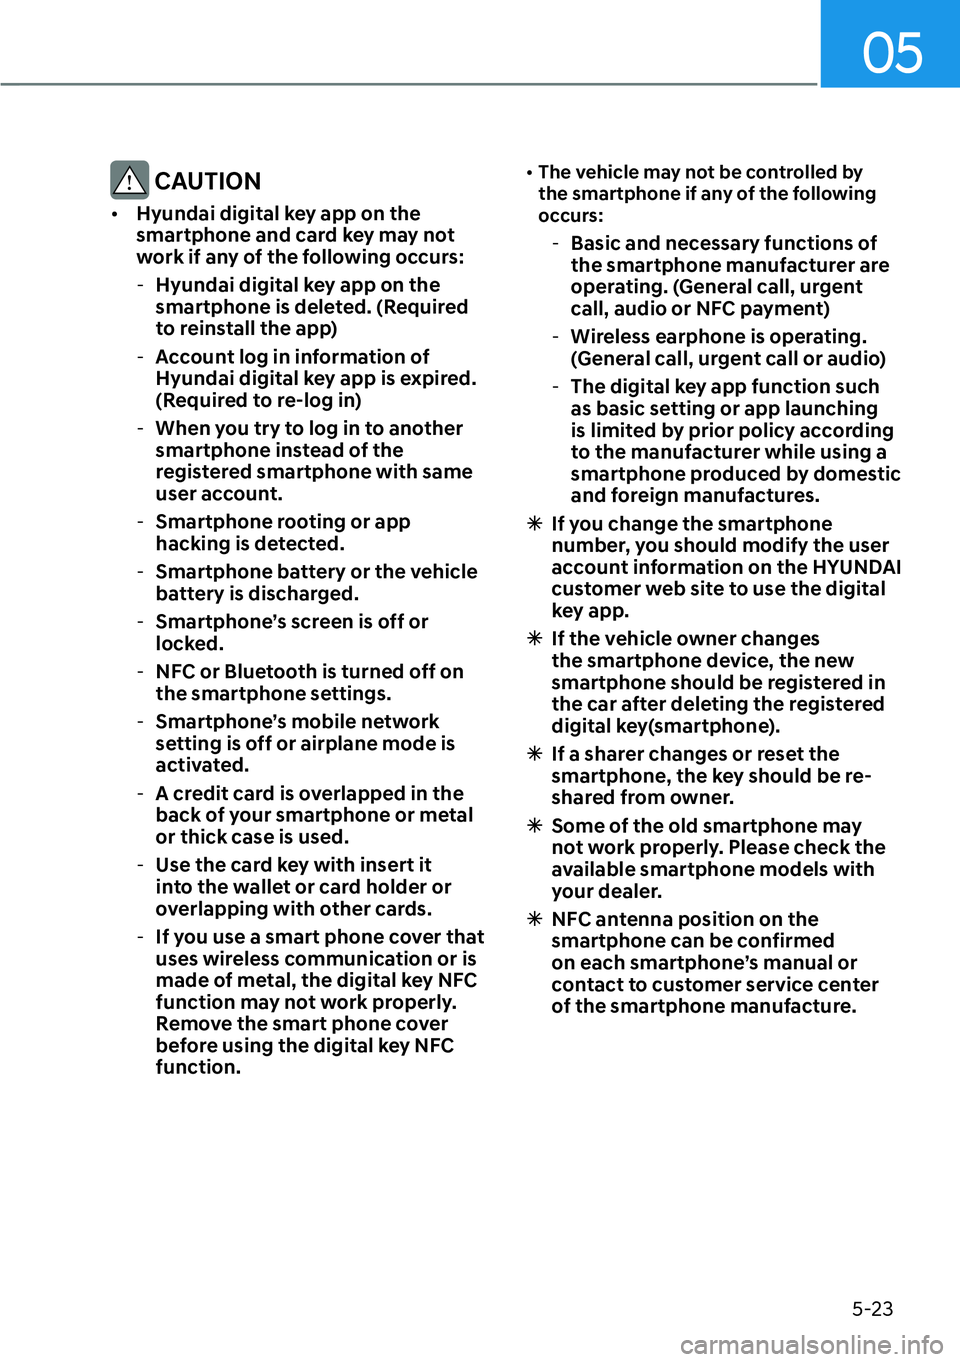 HYUNDAI IONIQ 5 2022  Owners Manual 05
5-23
 CAUTION
[�Hyundai digital key app on the 
smartphone and card key may not 
work if any of the following occurs:
  -Hyundai digital key app on the 
smartphone is deleted. (Required 
to reins